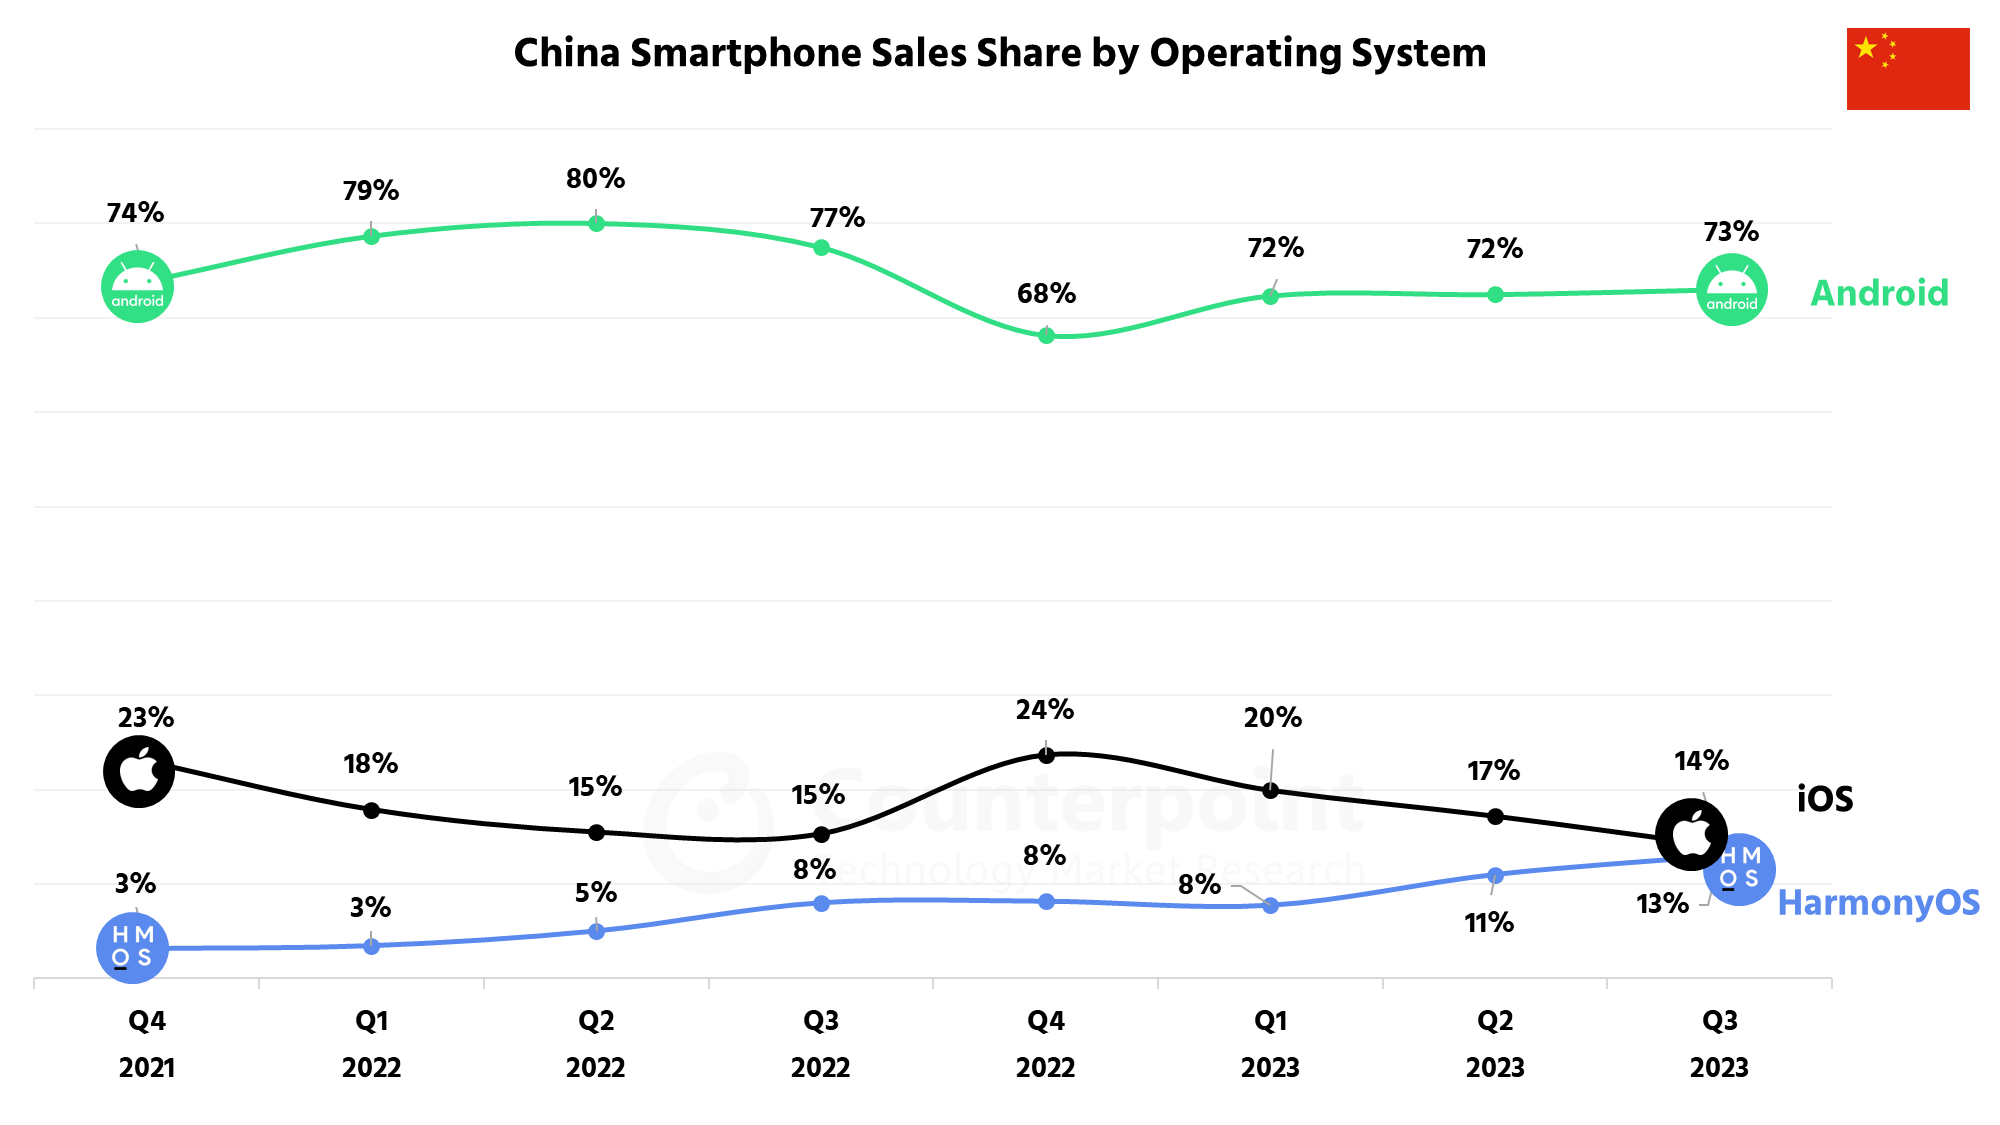 China Smartphone OS Sales Share Q3 2023